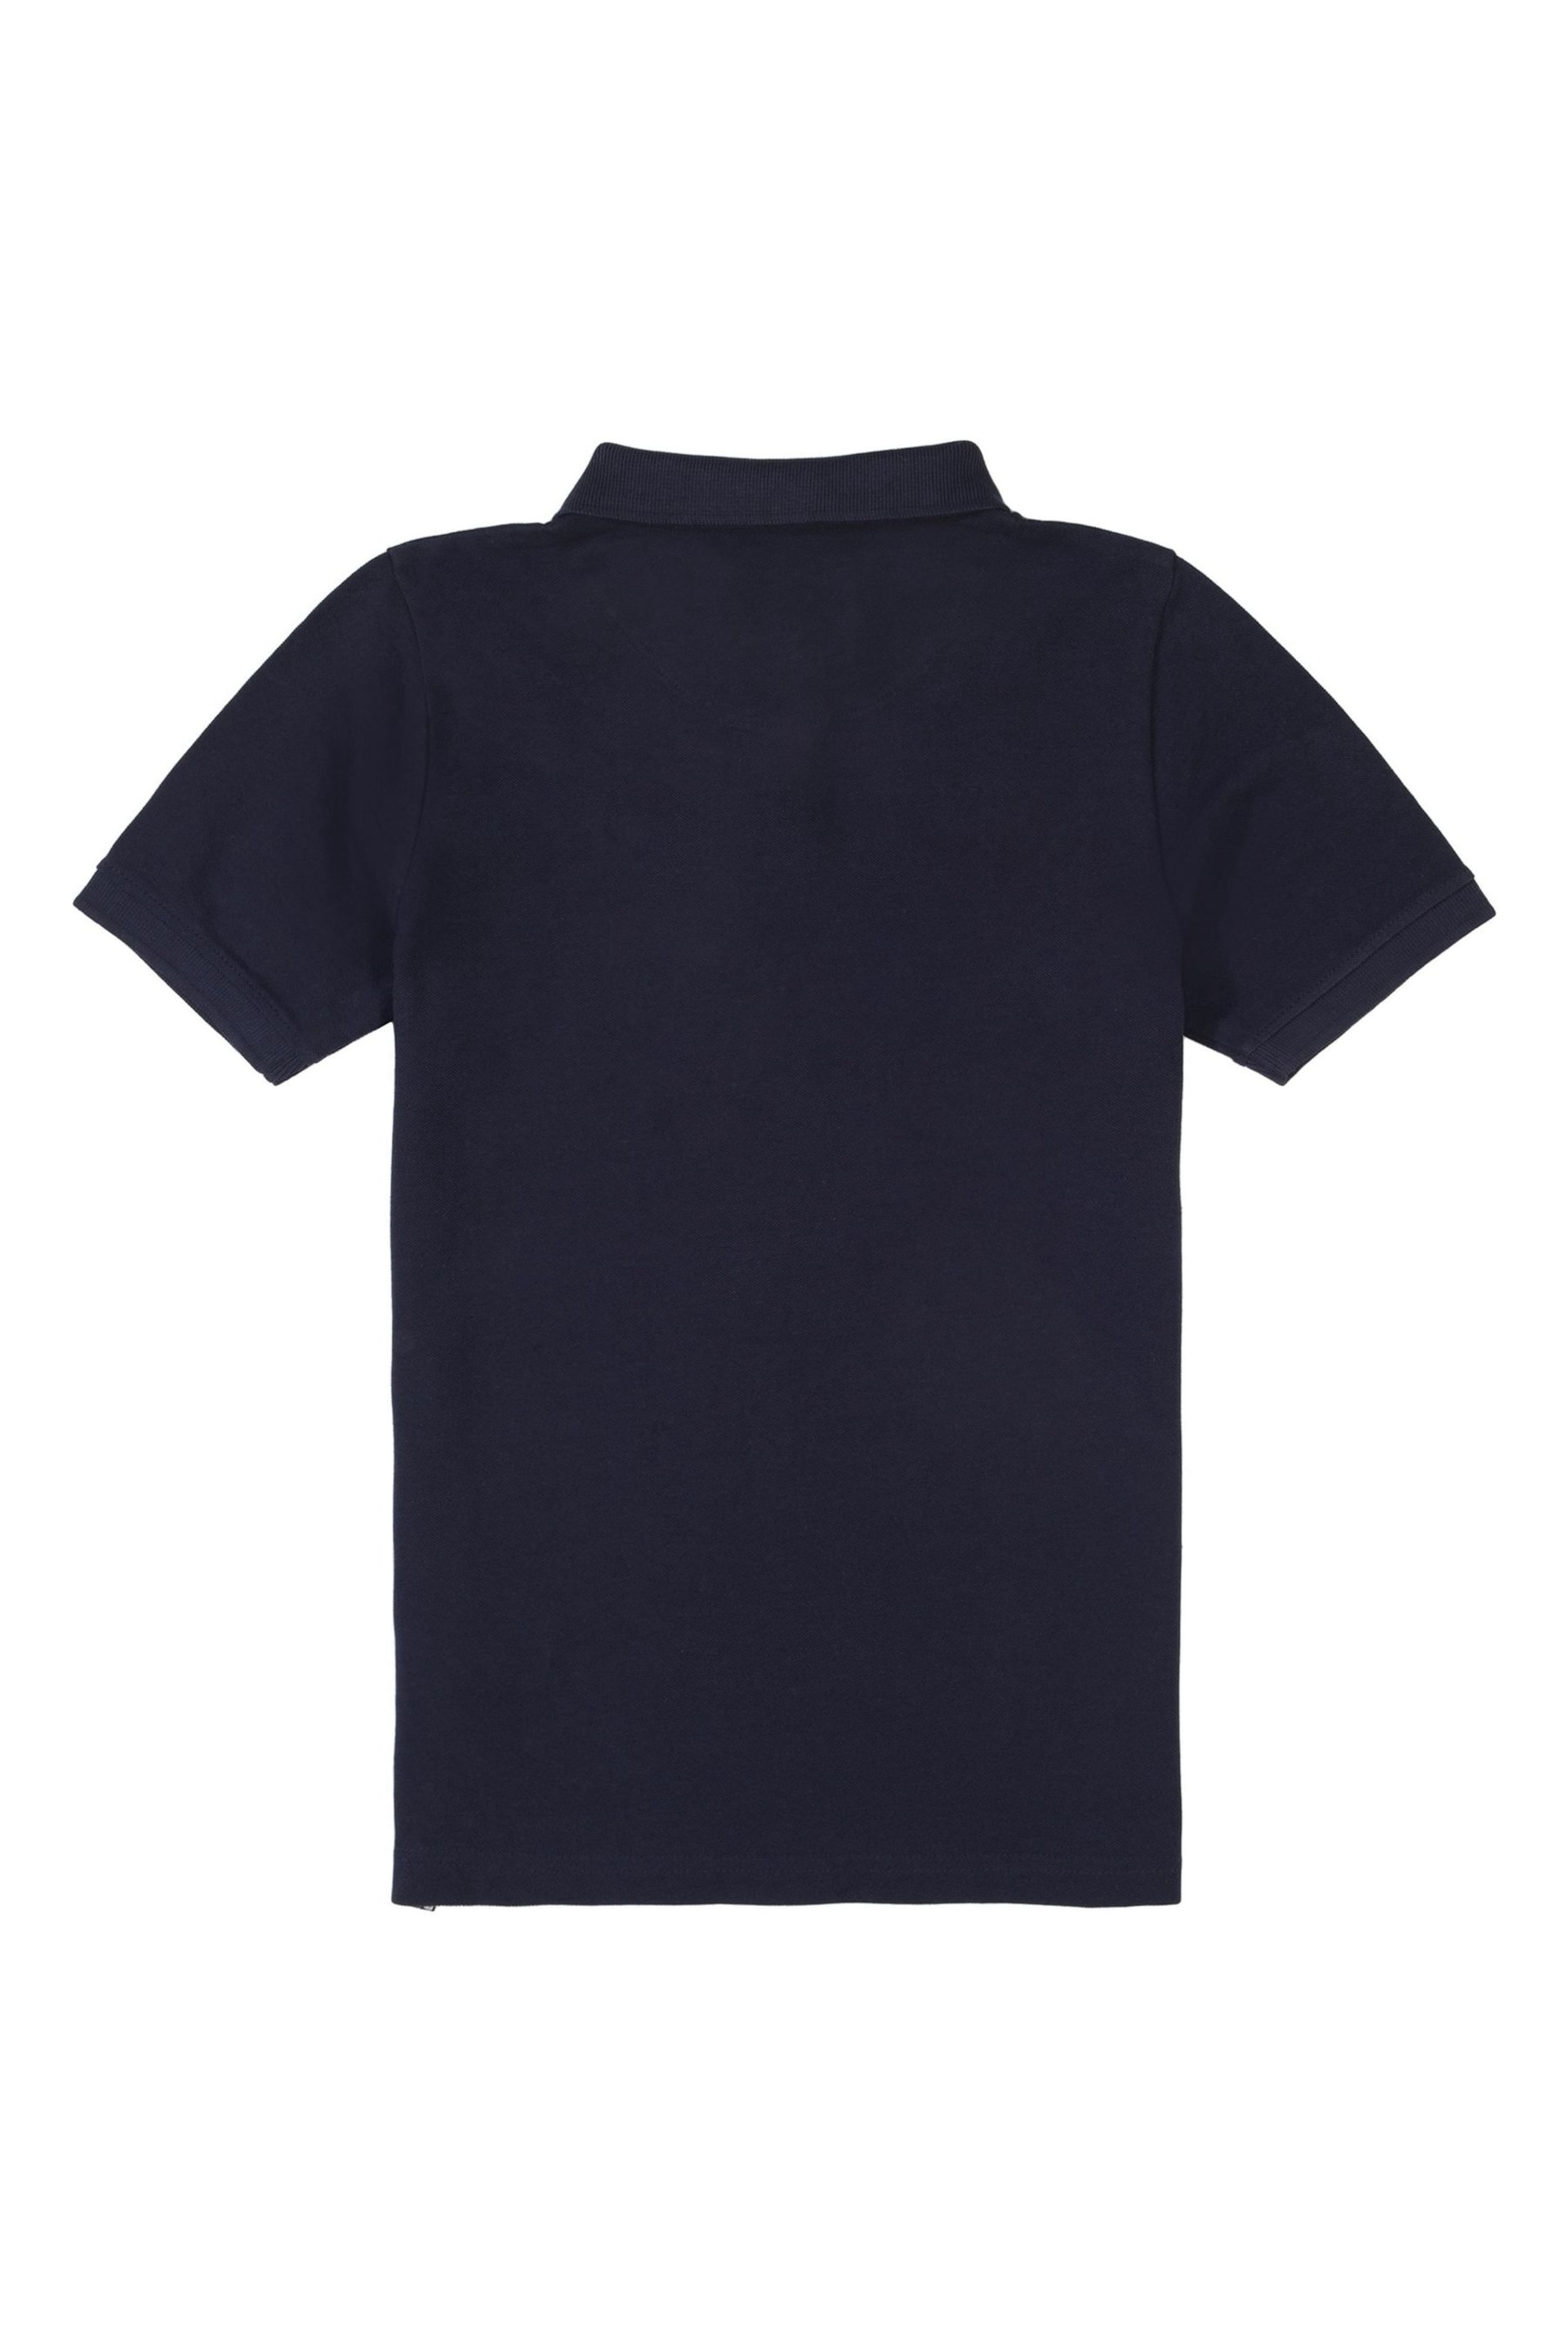 Jack Wills Boys Blue Polo Shirt - Image 5 of 7